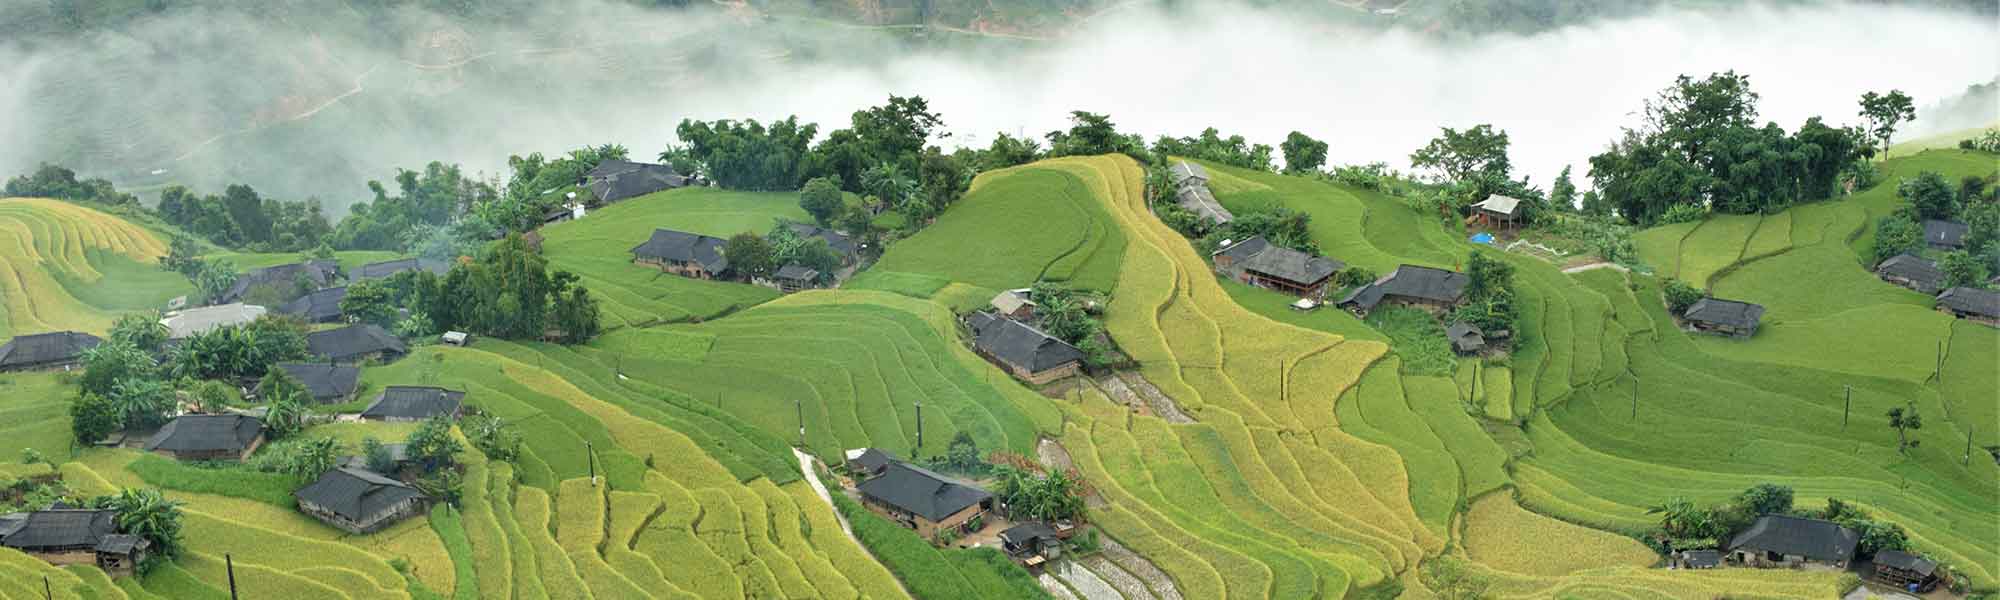 Hus i grønt fjellandskap i Giang i Vietnam